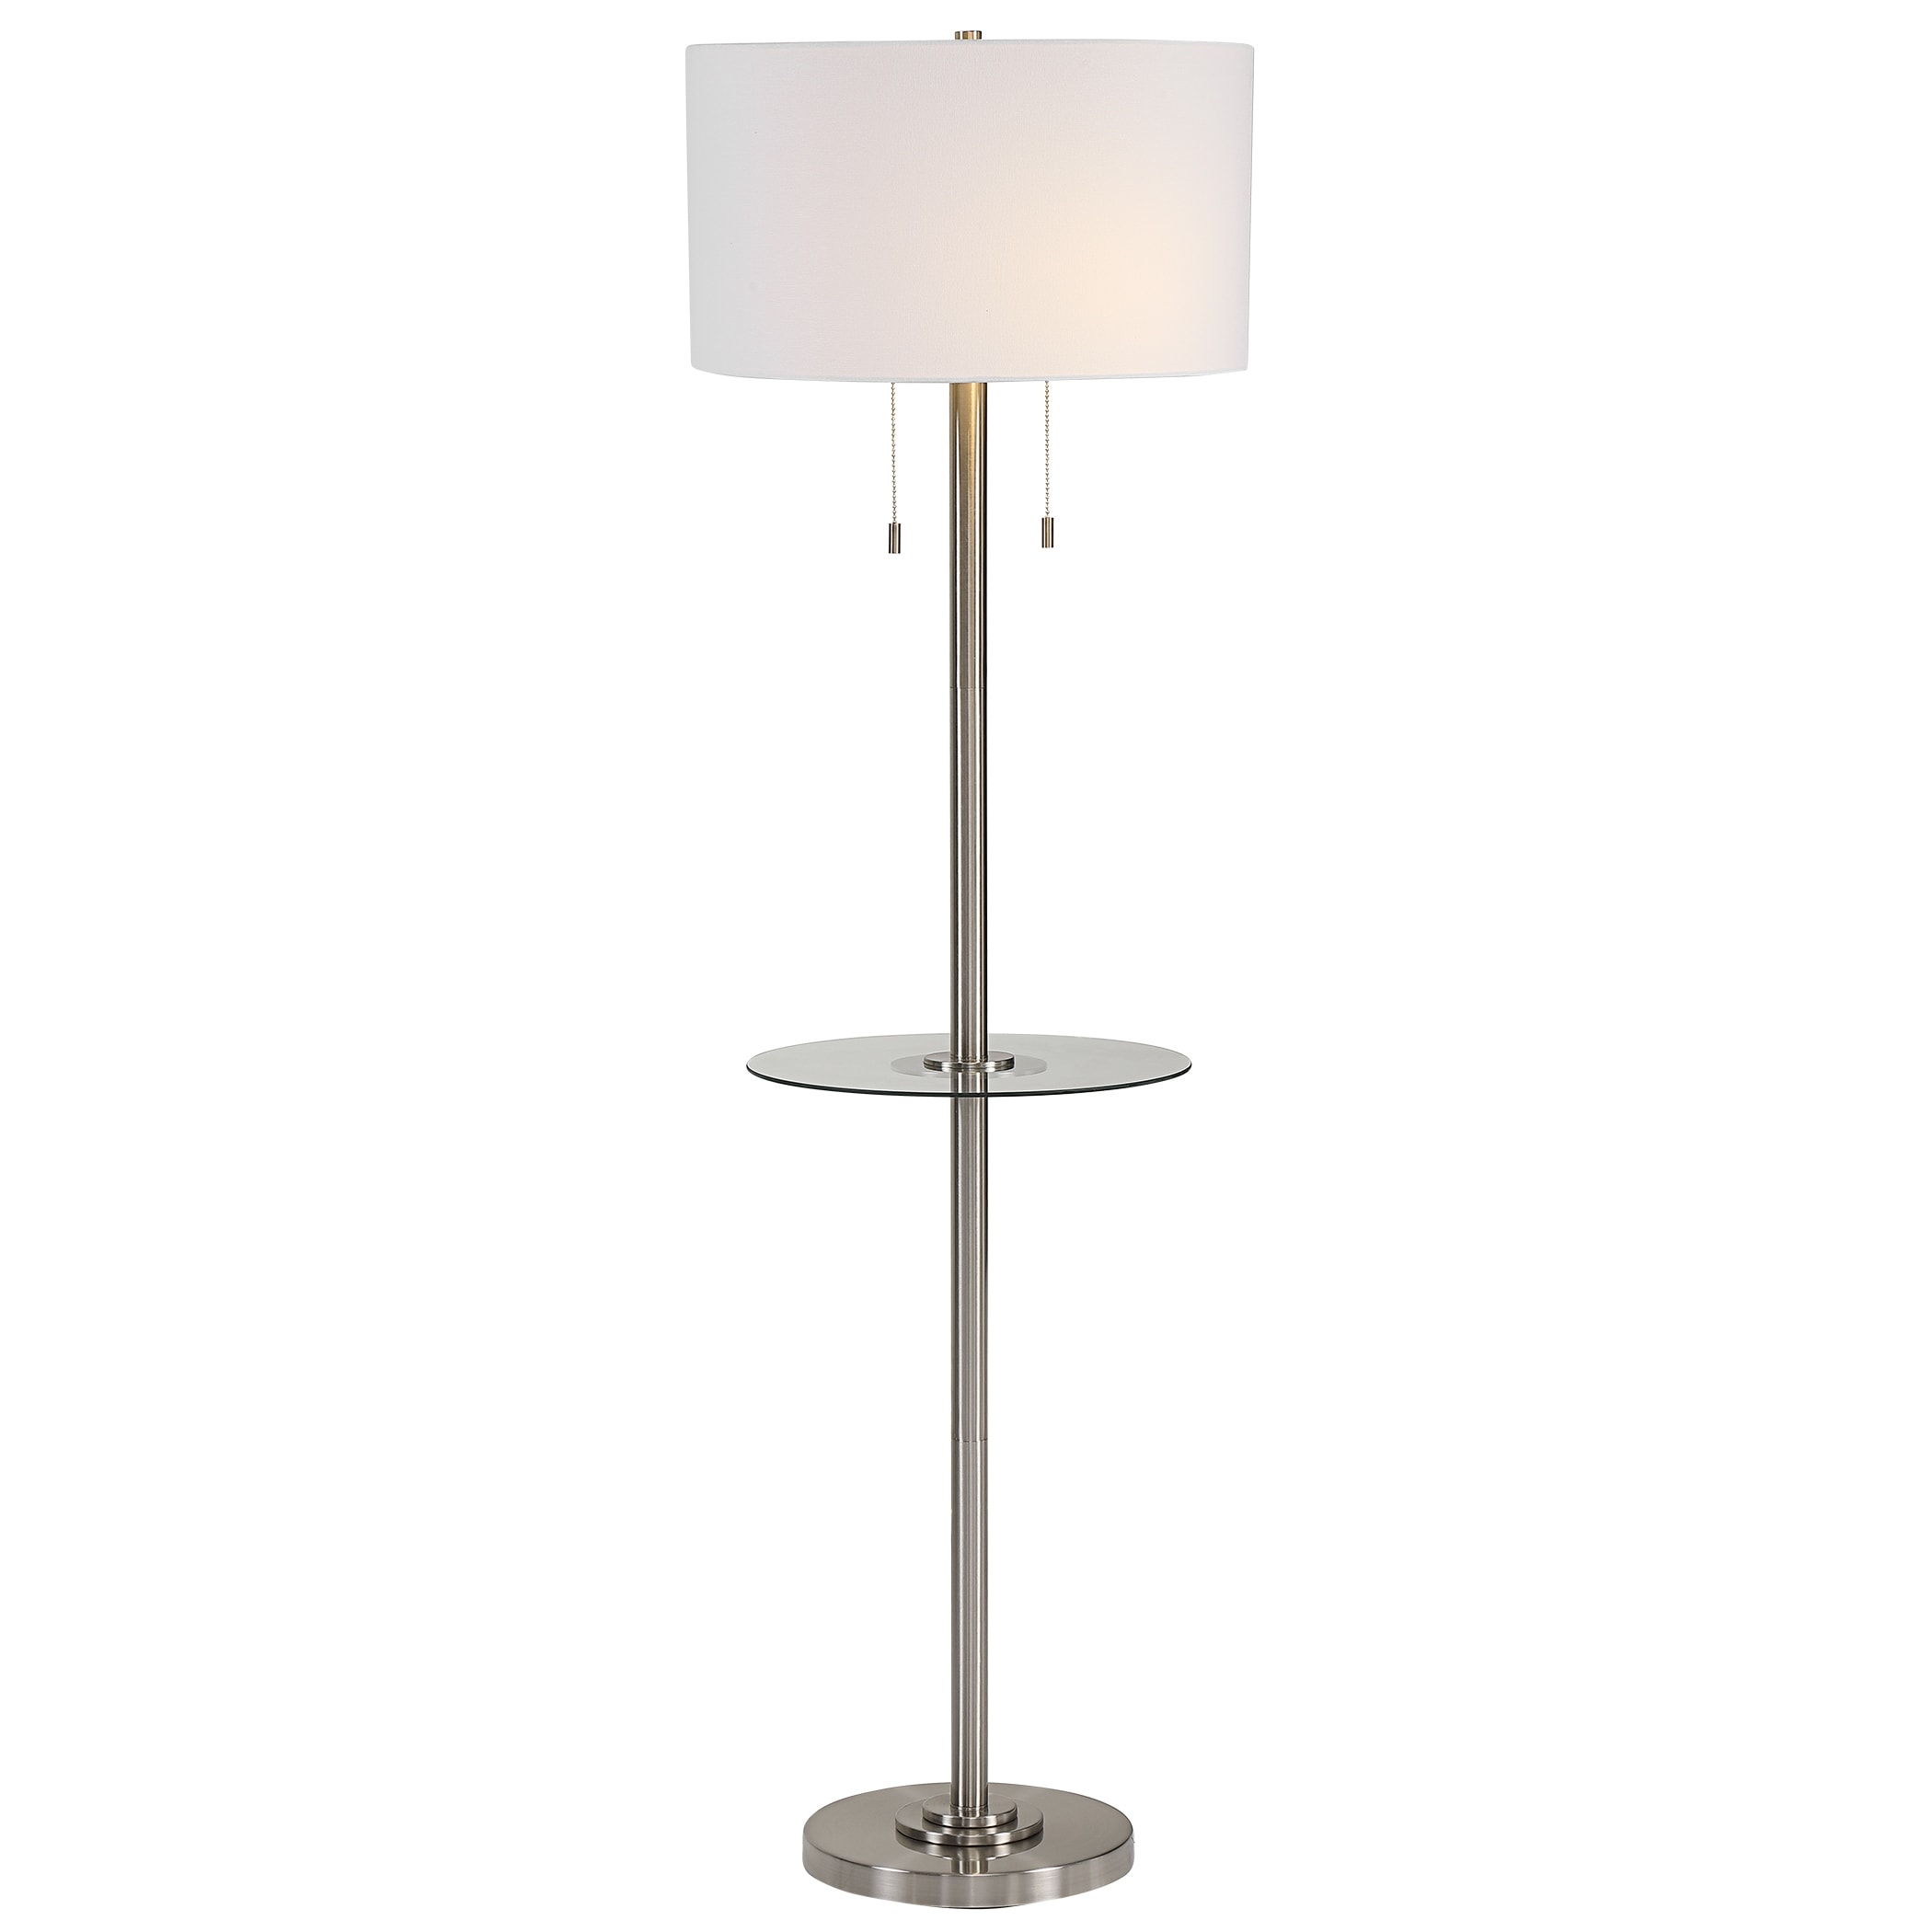 Brushed Nickel Steel 2-light Floor Lamp